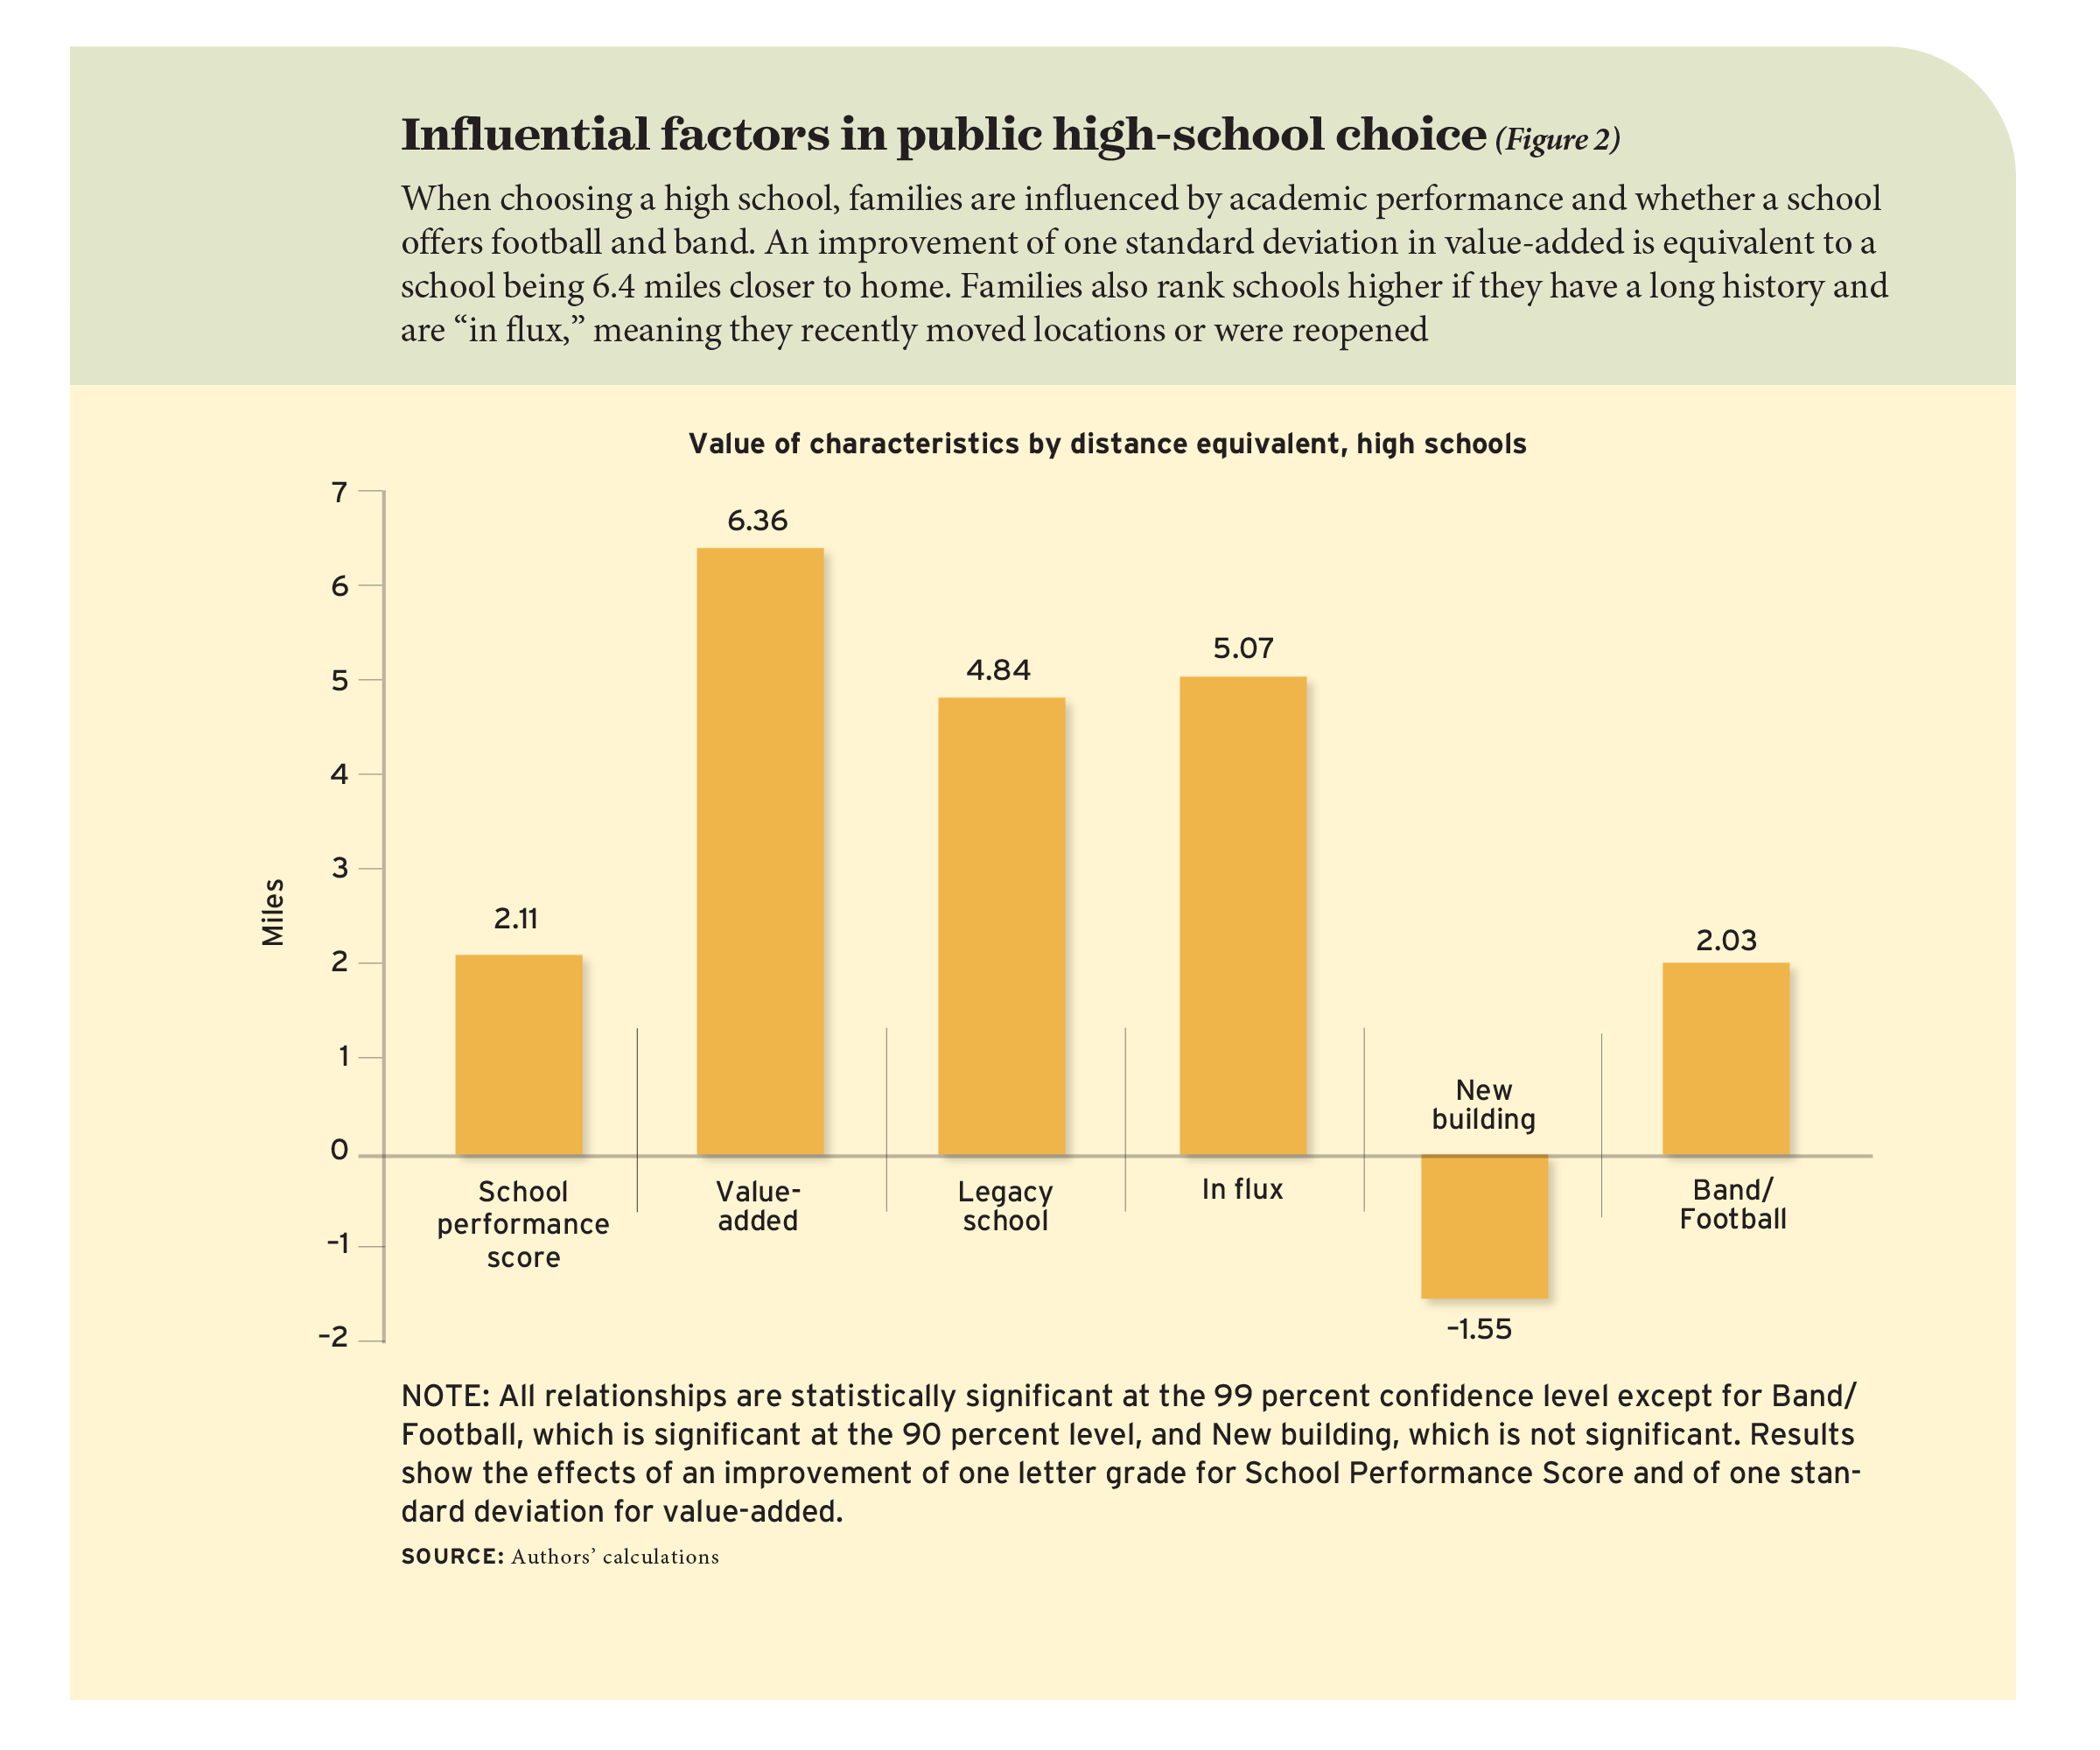 Figure 2: Influential factors in public high-school choice